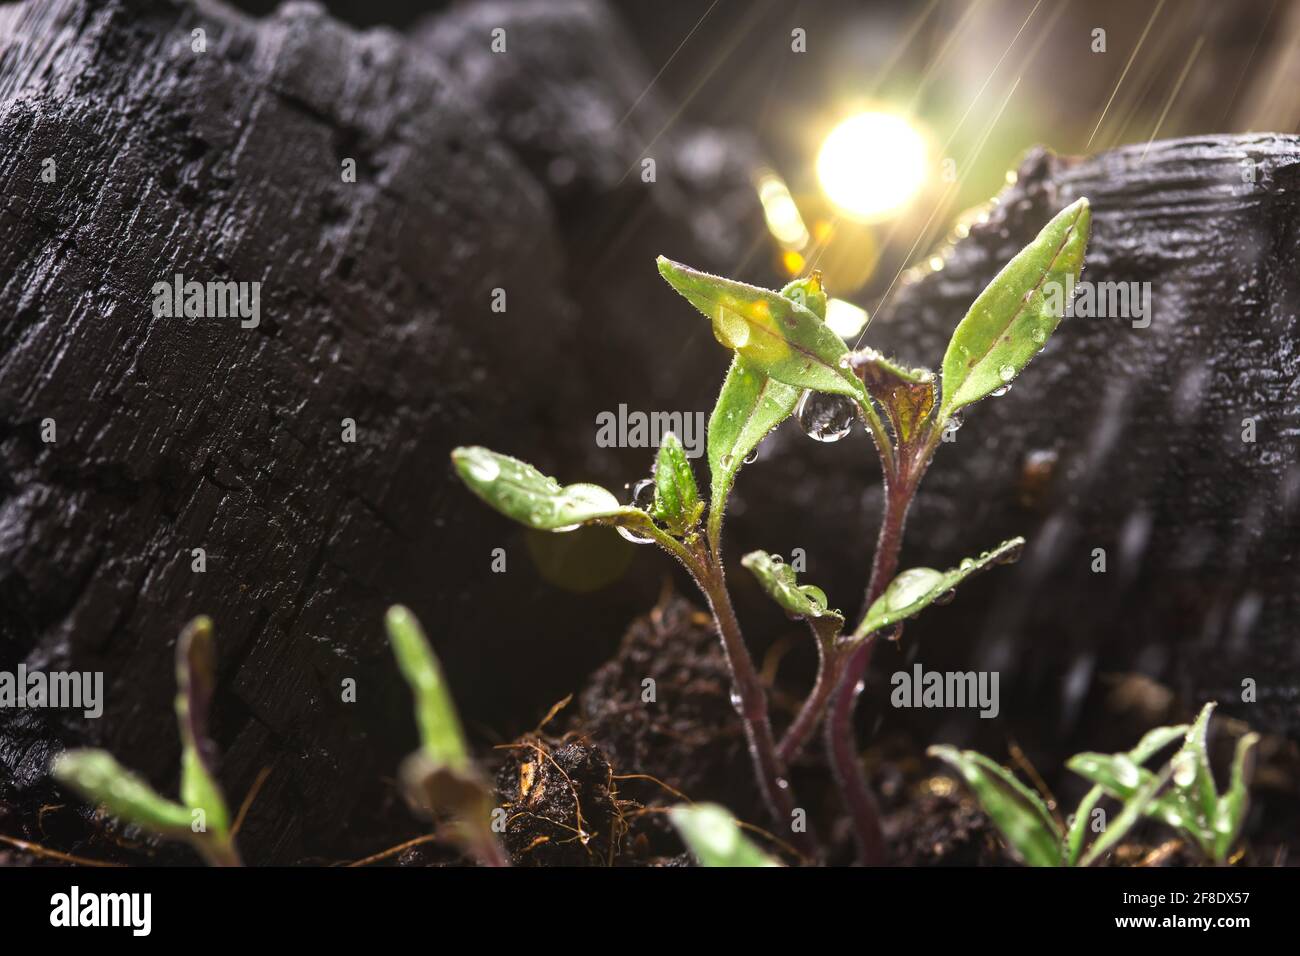 Baby tomato plants in the garden Stock Photo